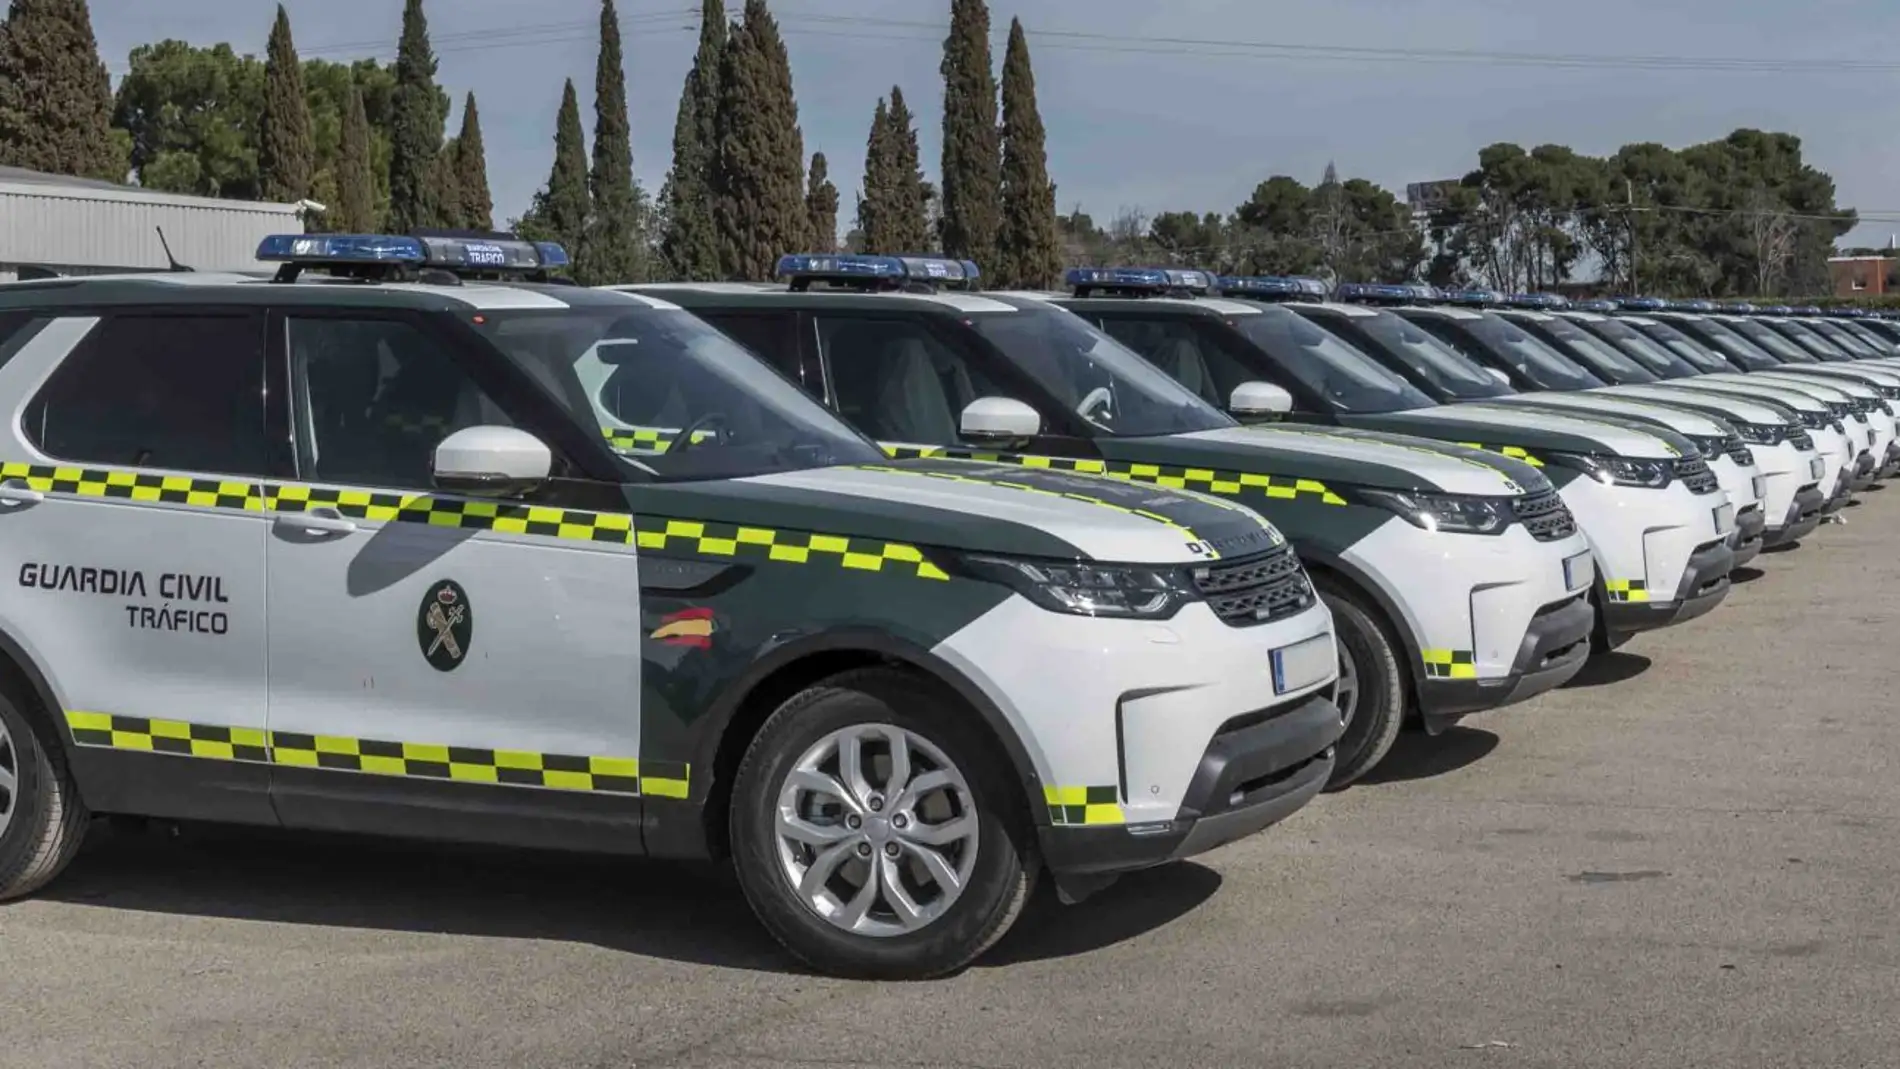 La DGT incorpora 85 Land Rover Discovery a la flota de la Guardia Civil de Tráfico